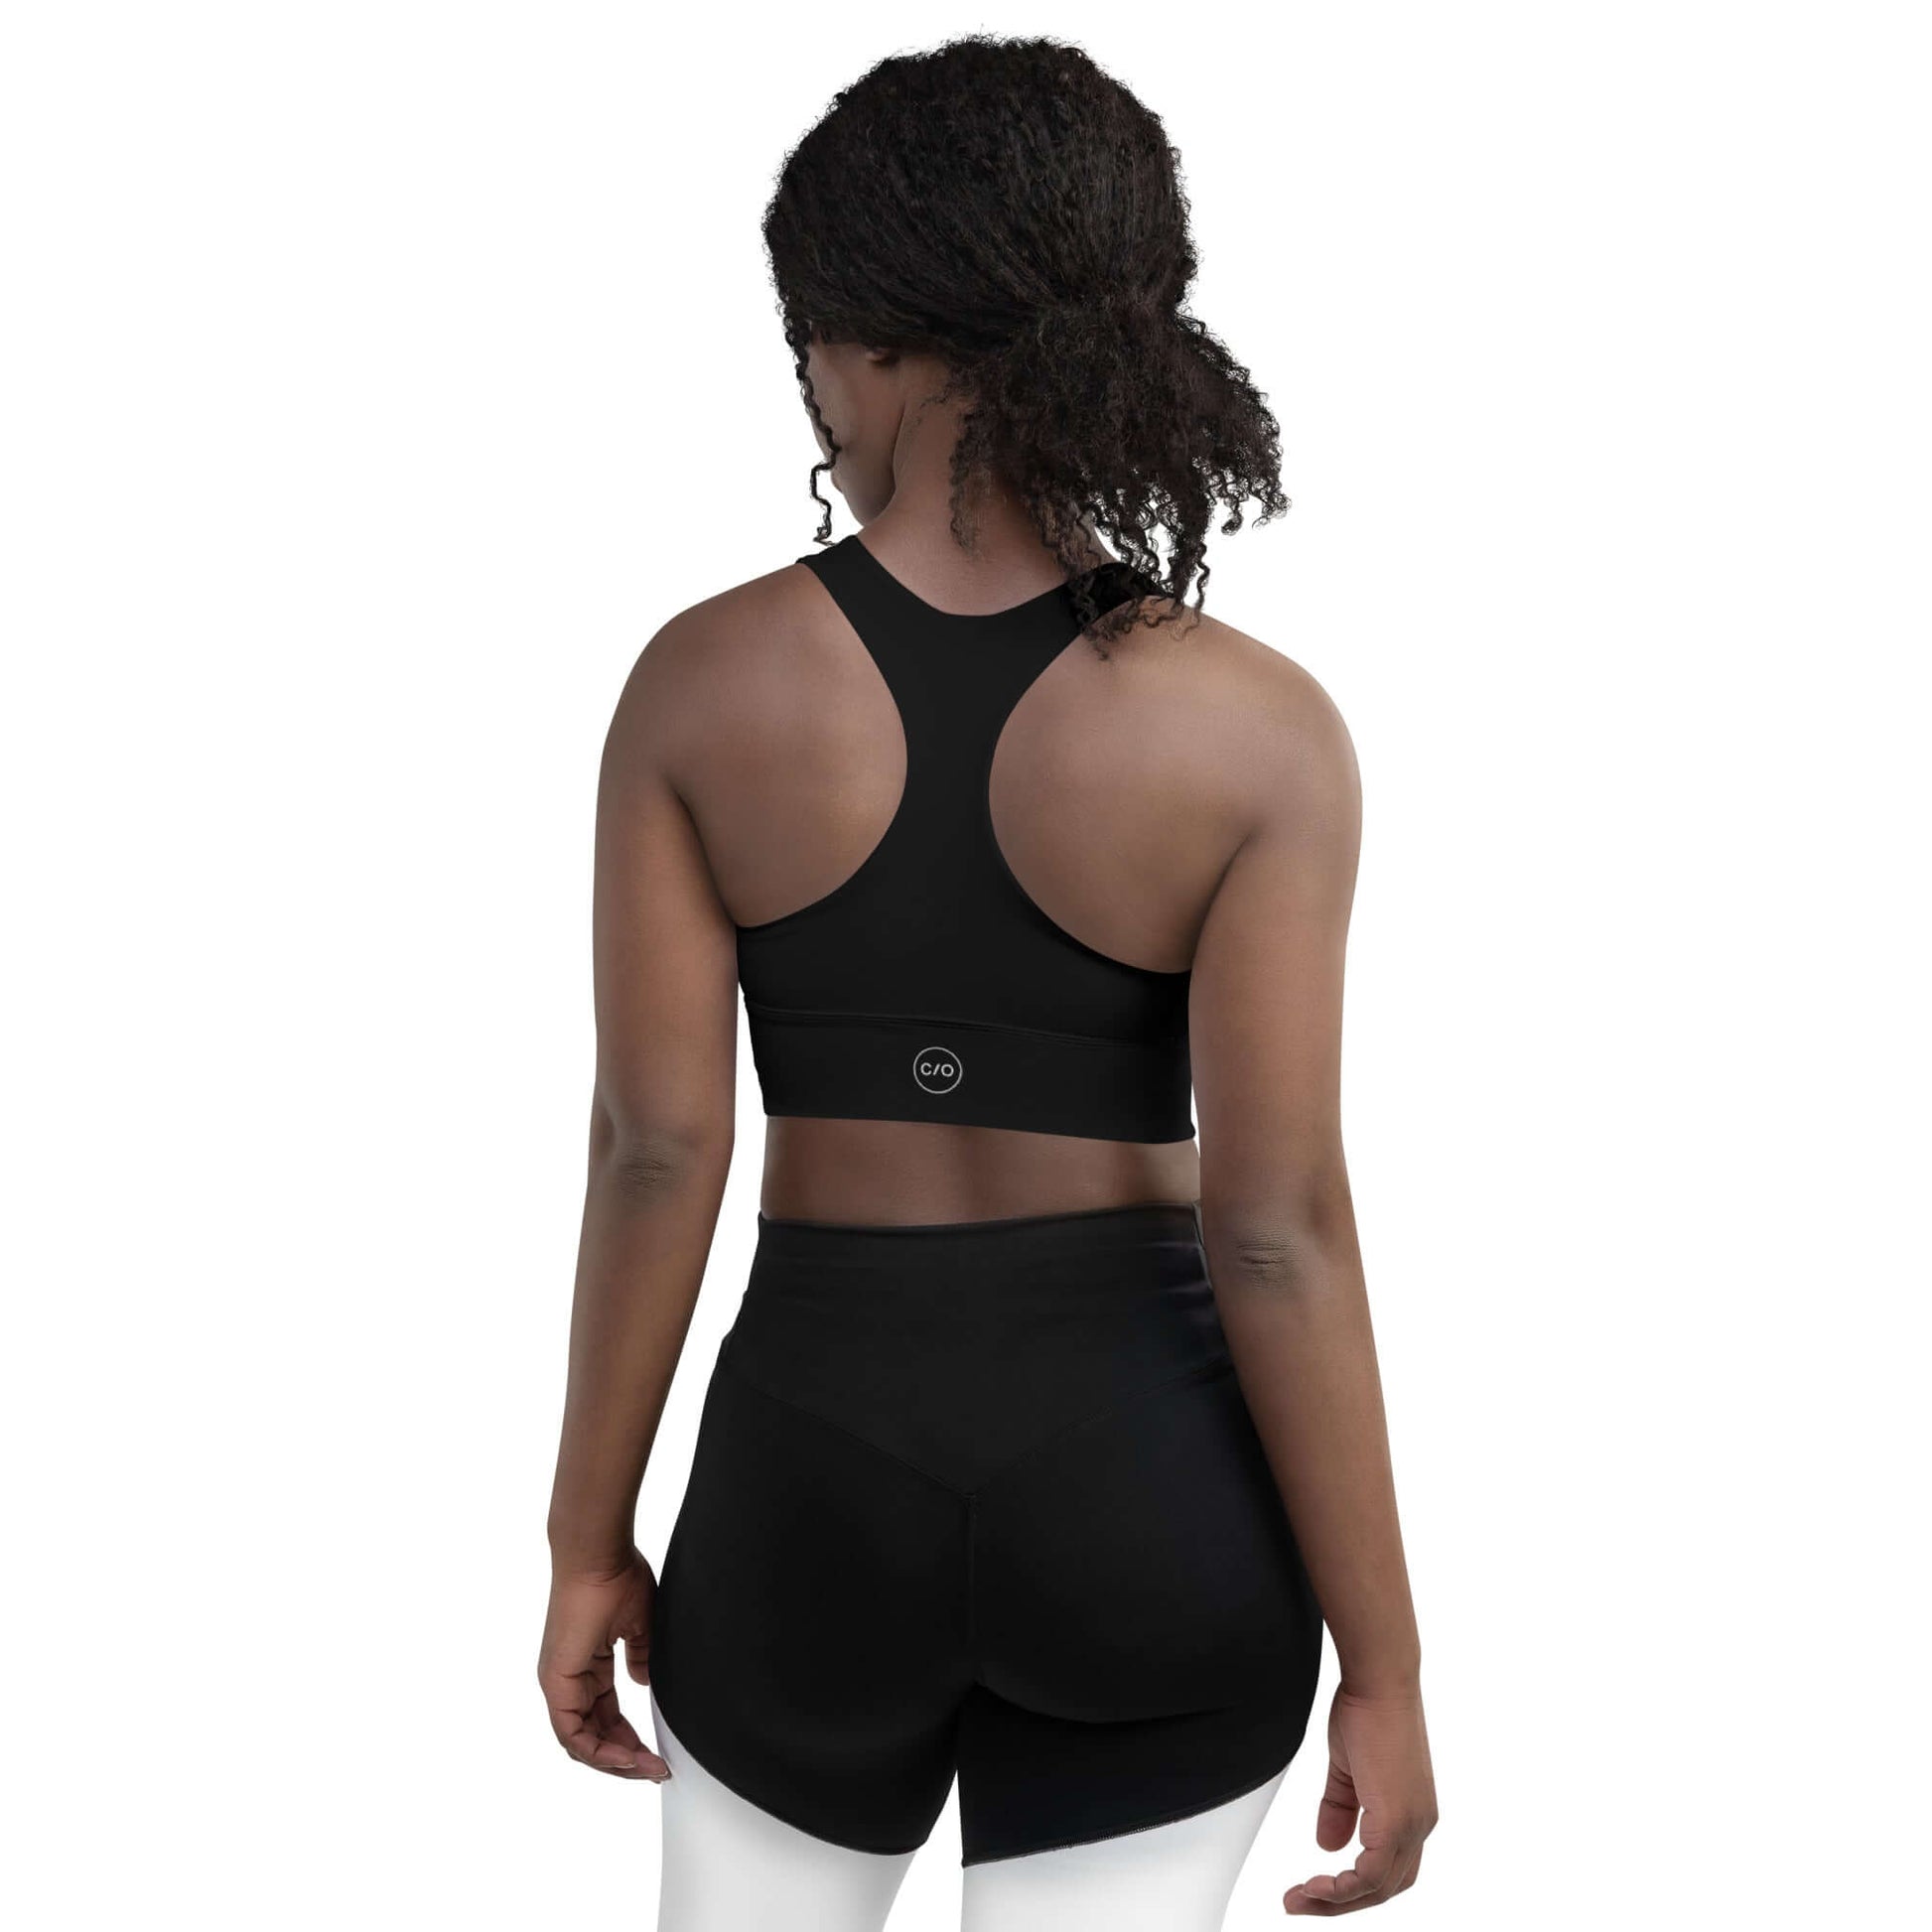 Woman wears Neue Supply Co. Longline Sports Bra in Black. Back view of model on white background.